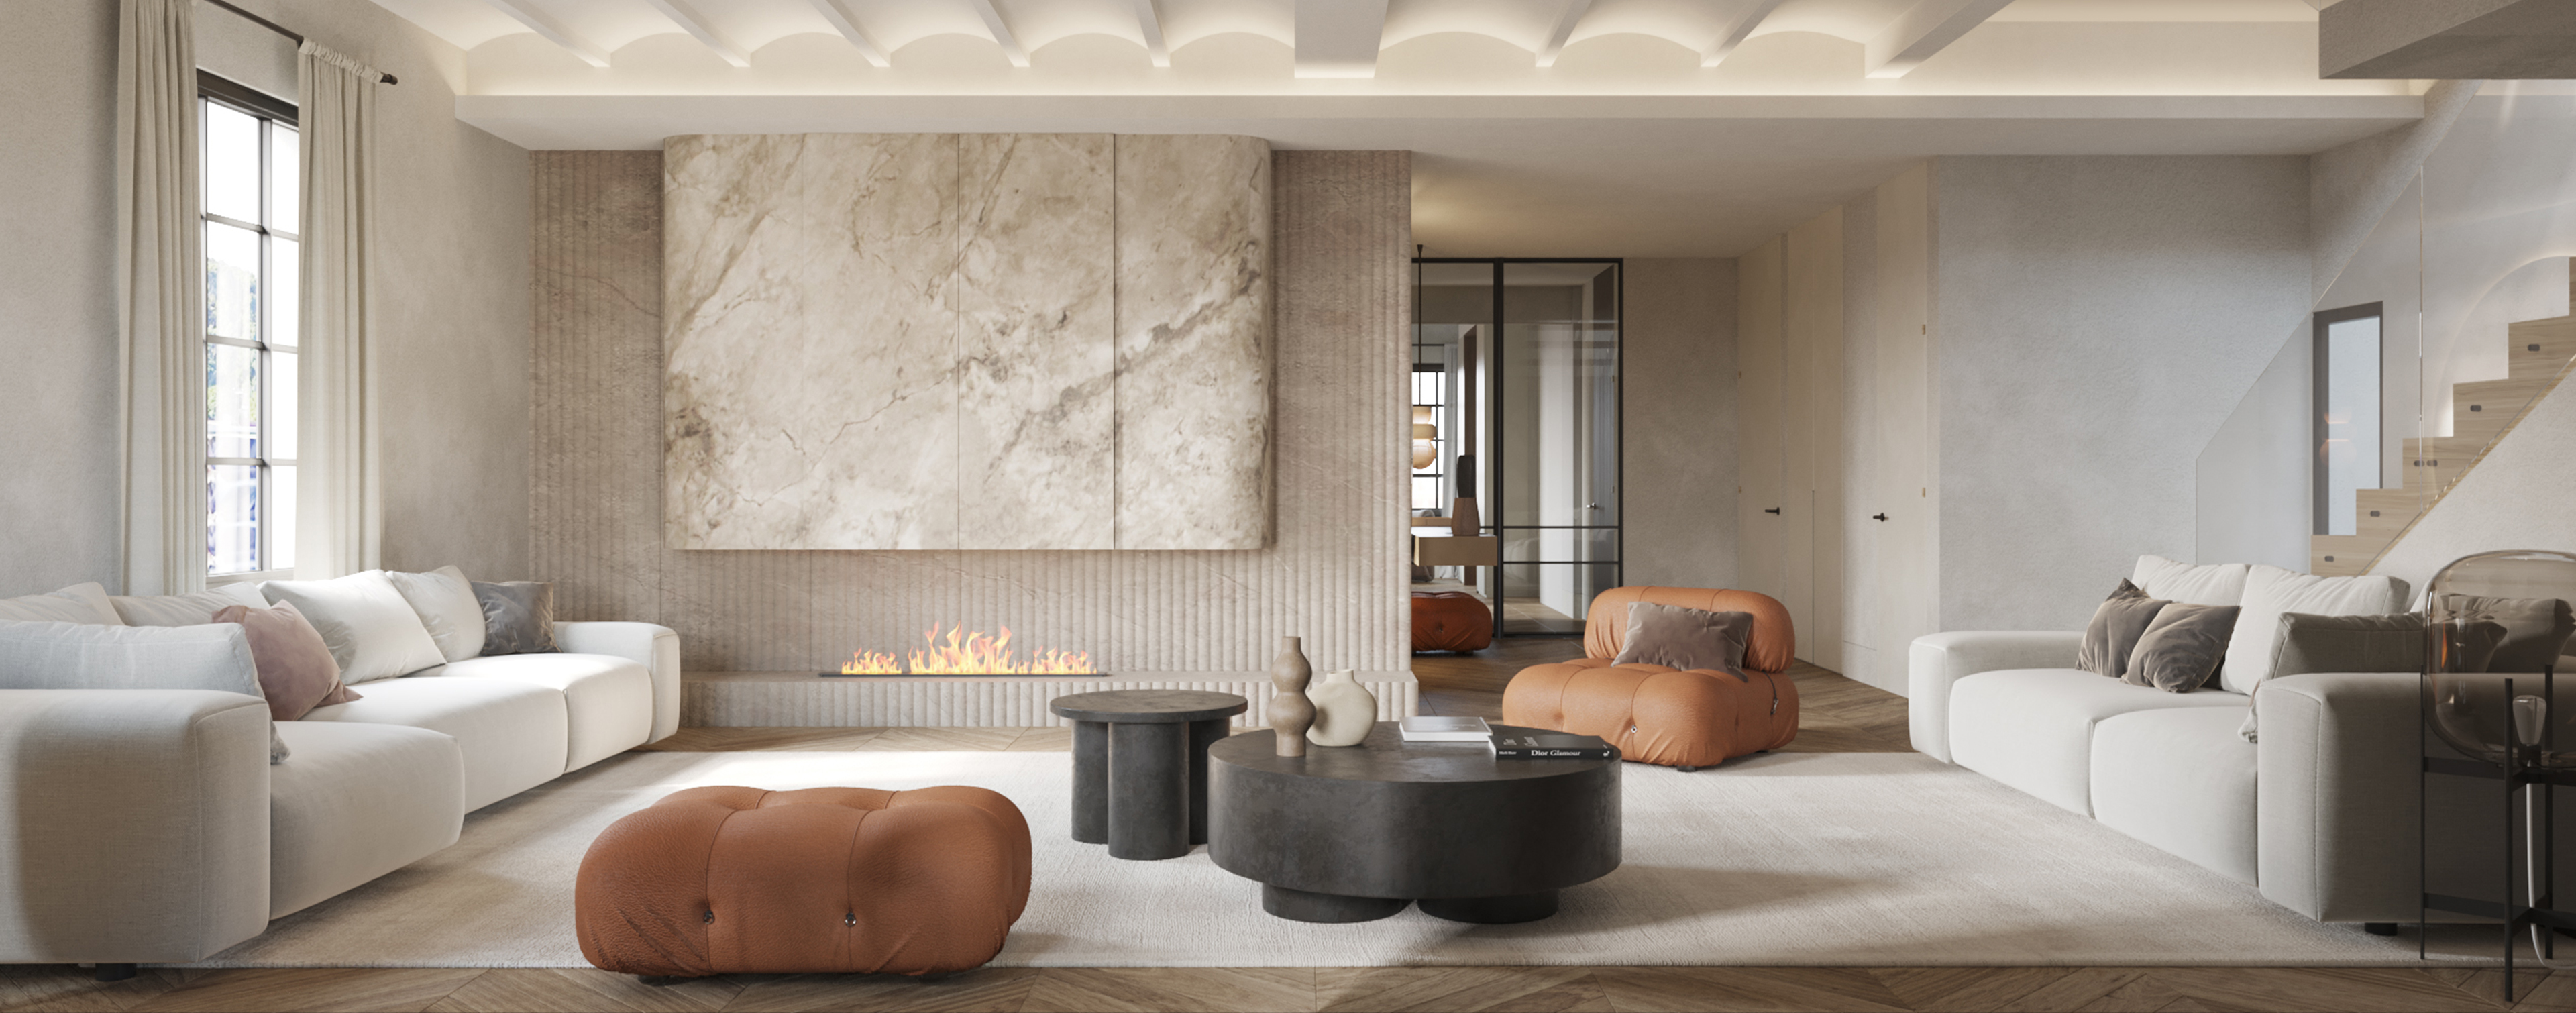 luv studio luxury architects barcelona pedralbes penthouse IMG 01 - Pedralbes Av. Penthouse